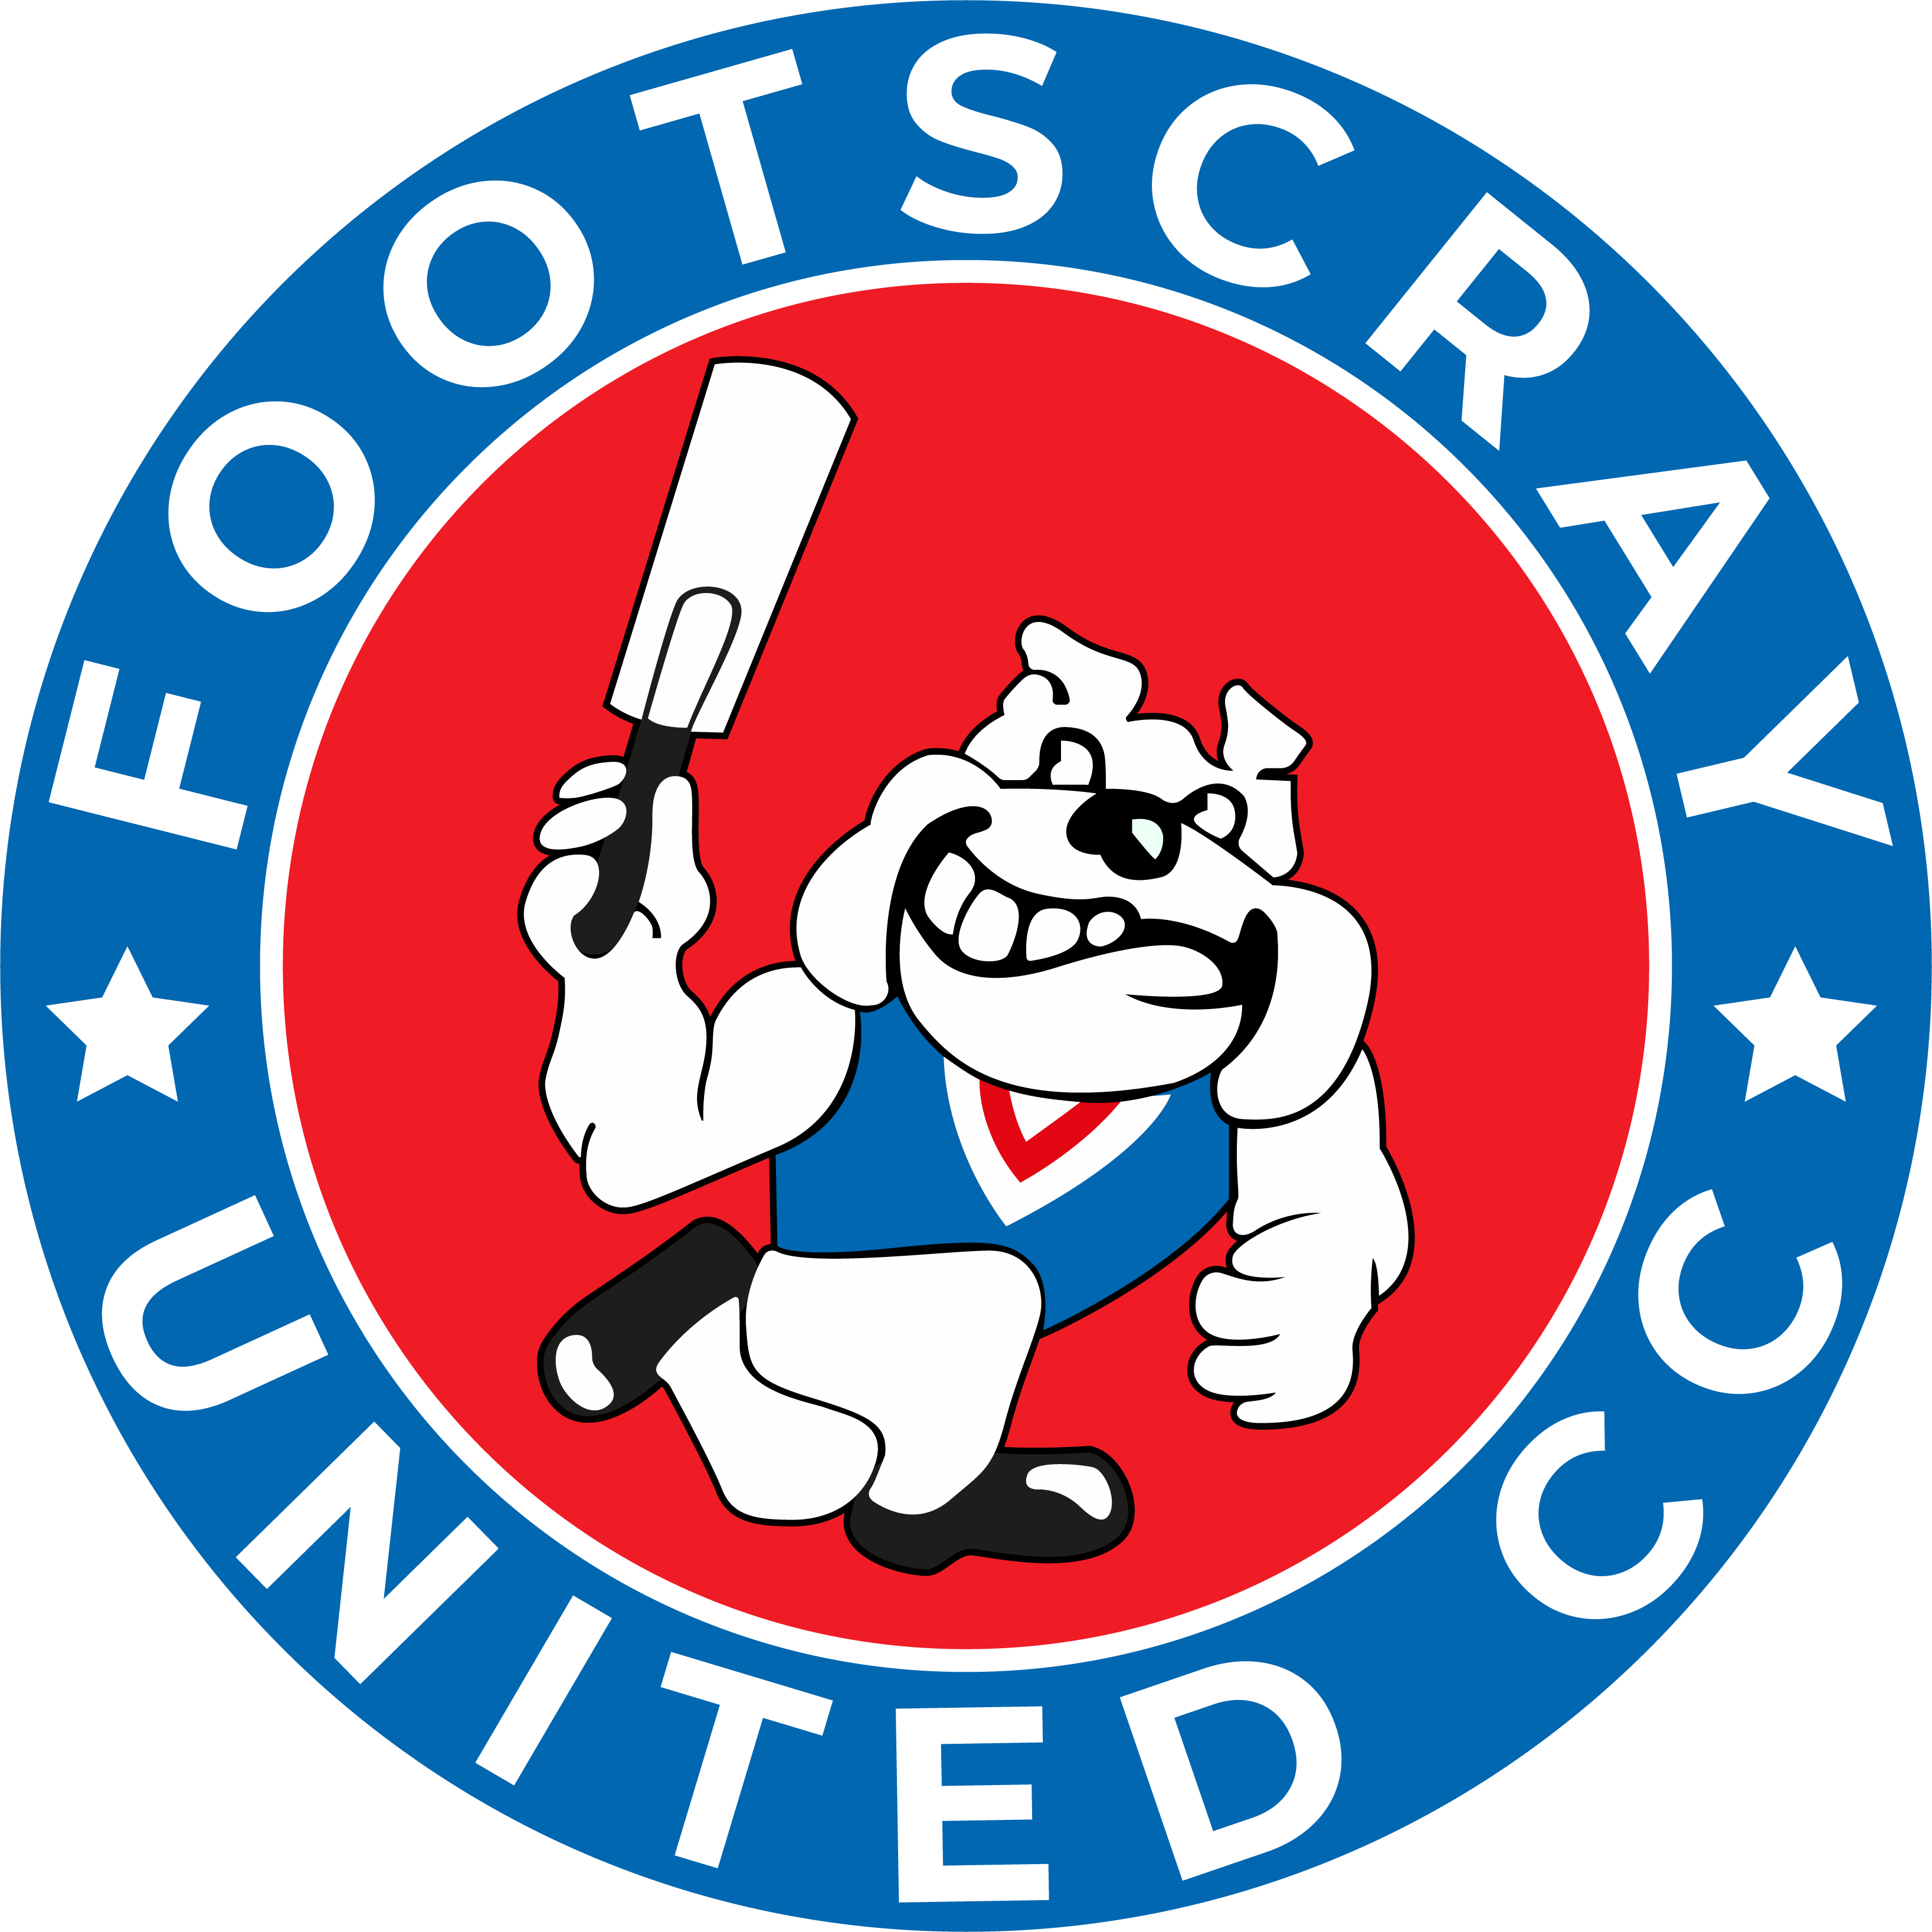 Footscray United Cricket Club